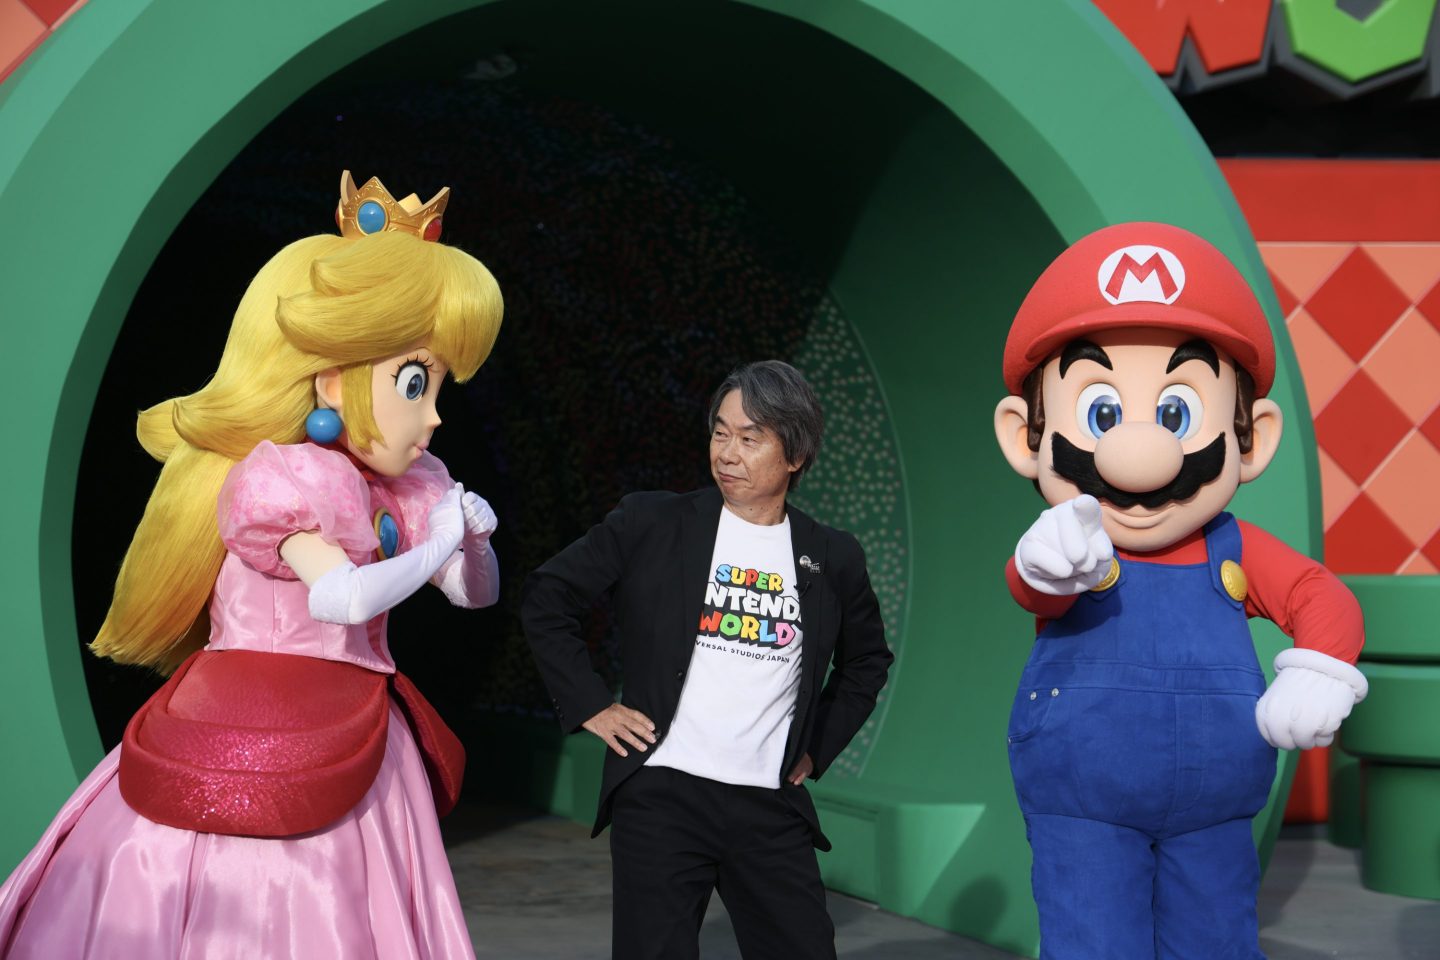 Nintendo wants to add three women to its board of directors.